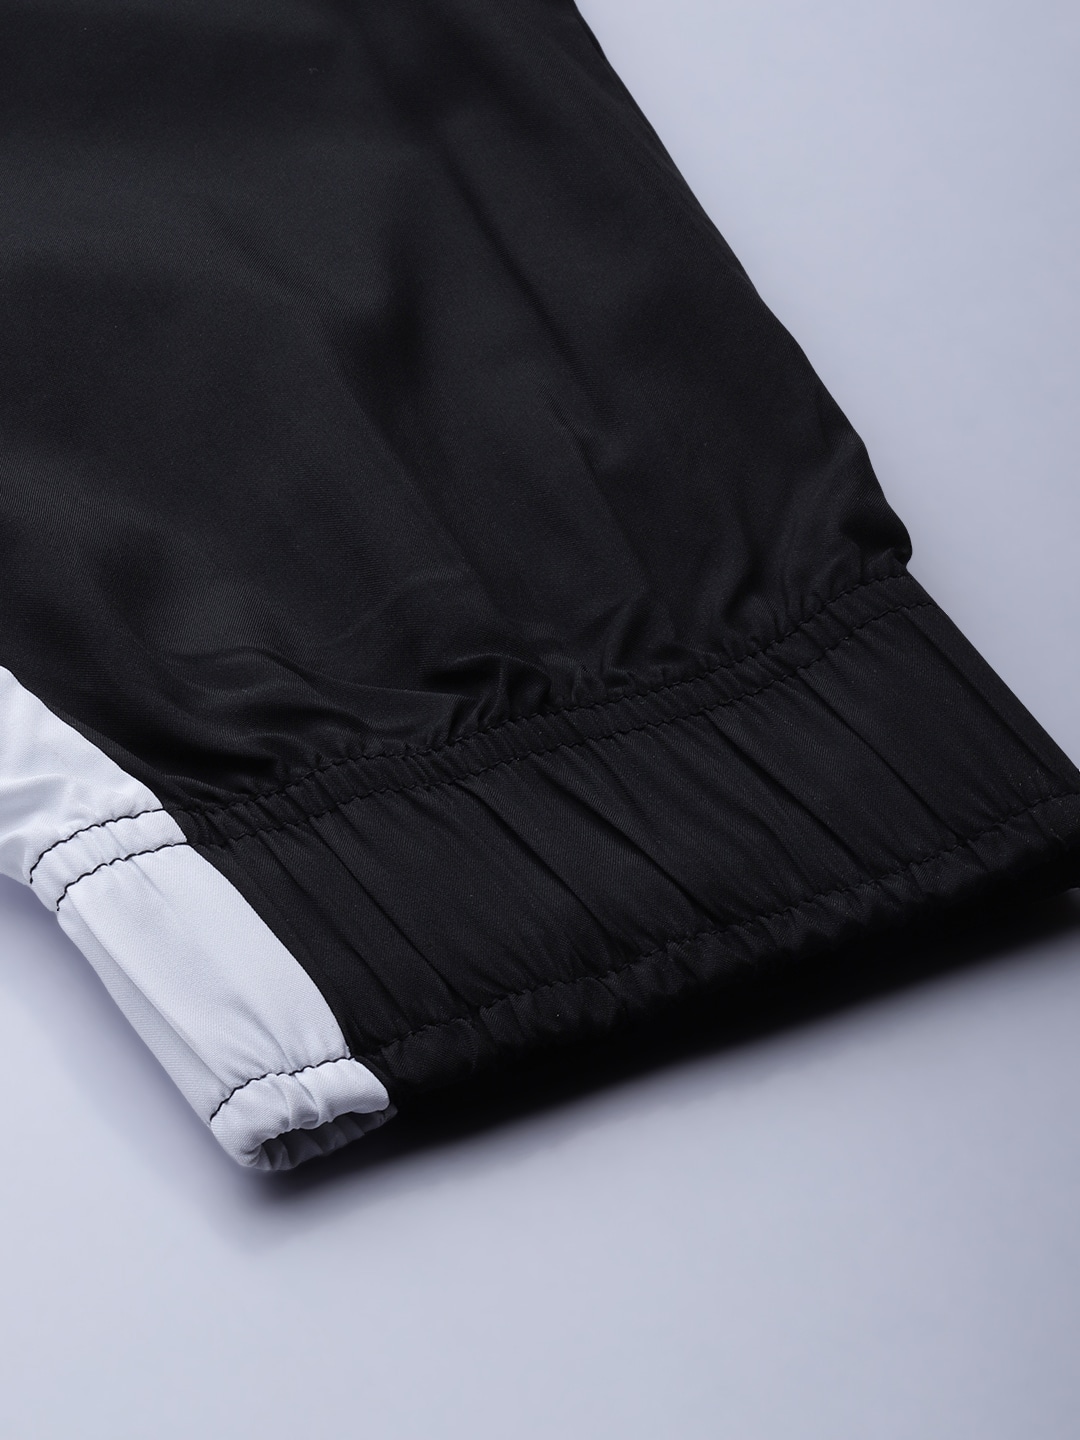 Clothing Tracksuits | Puma Men Charcoal Black & White Colourblocked Tracksuits - OK35620